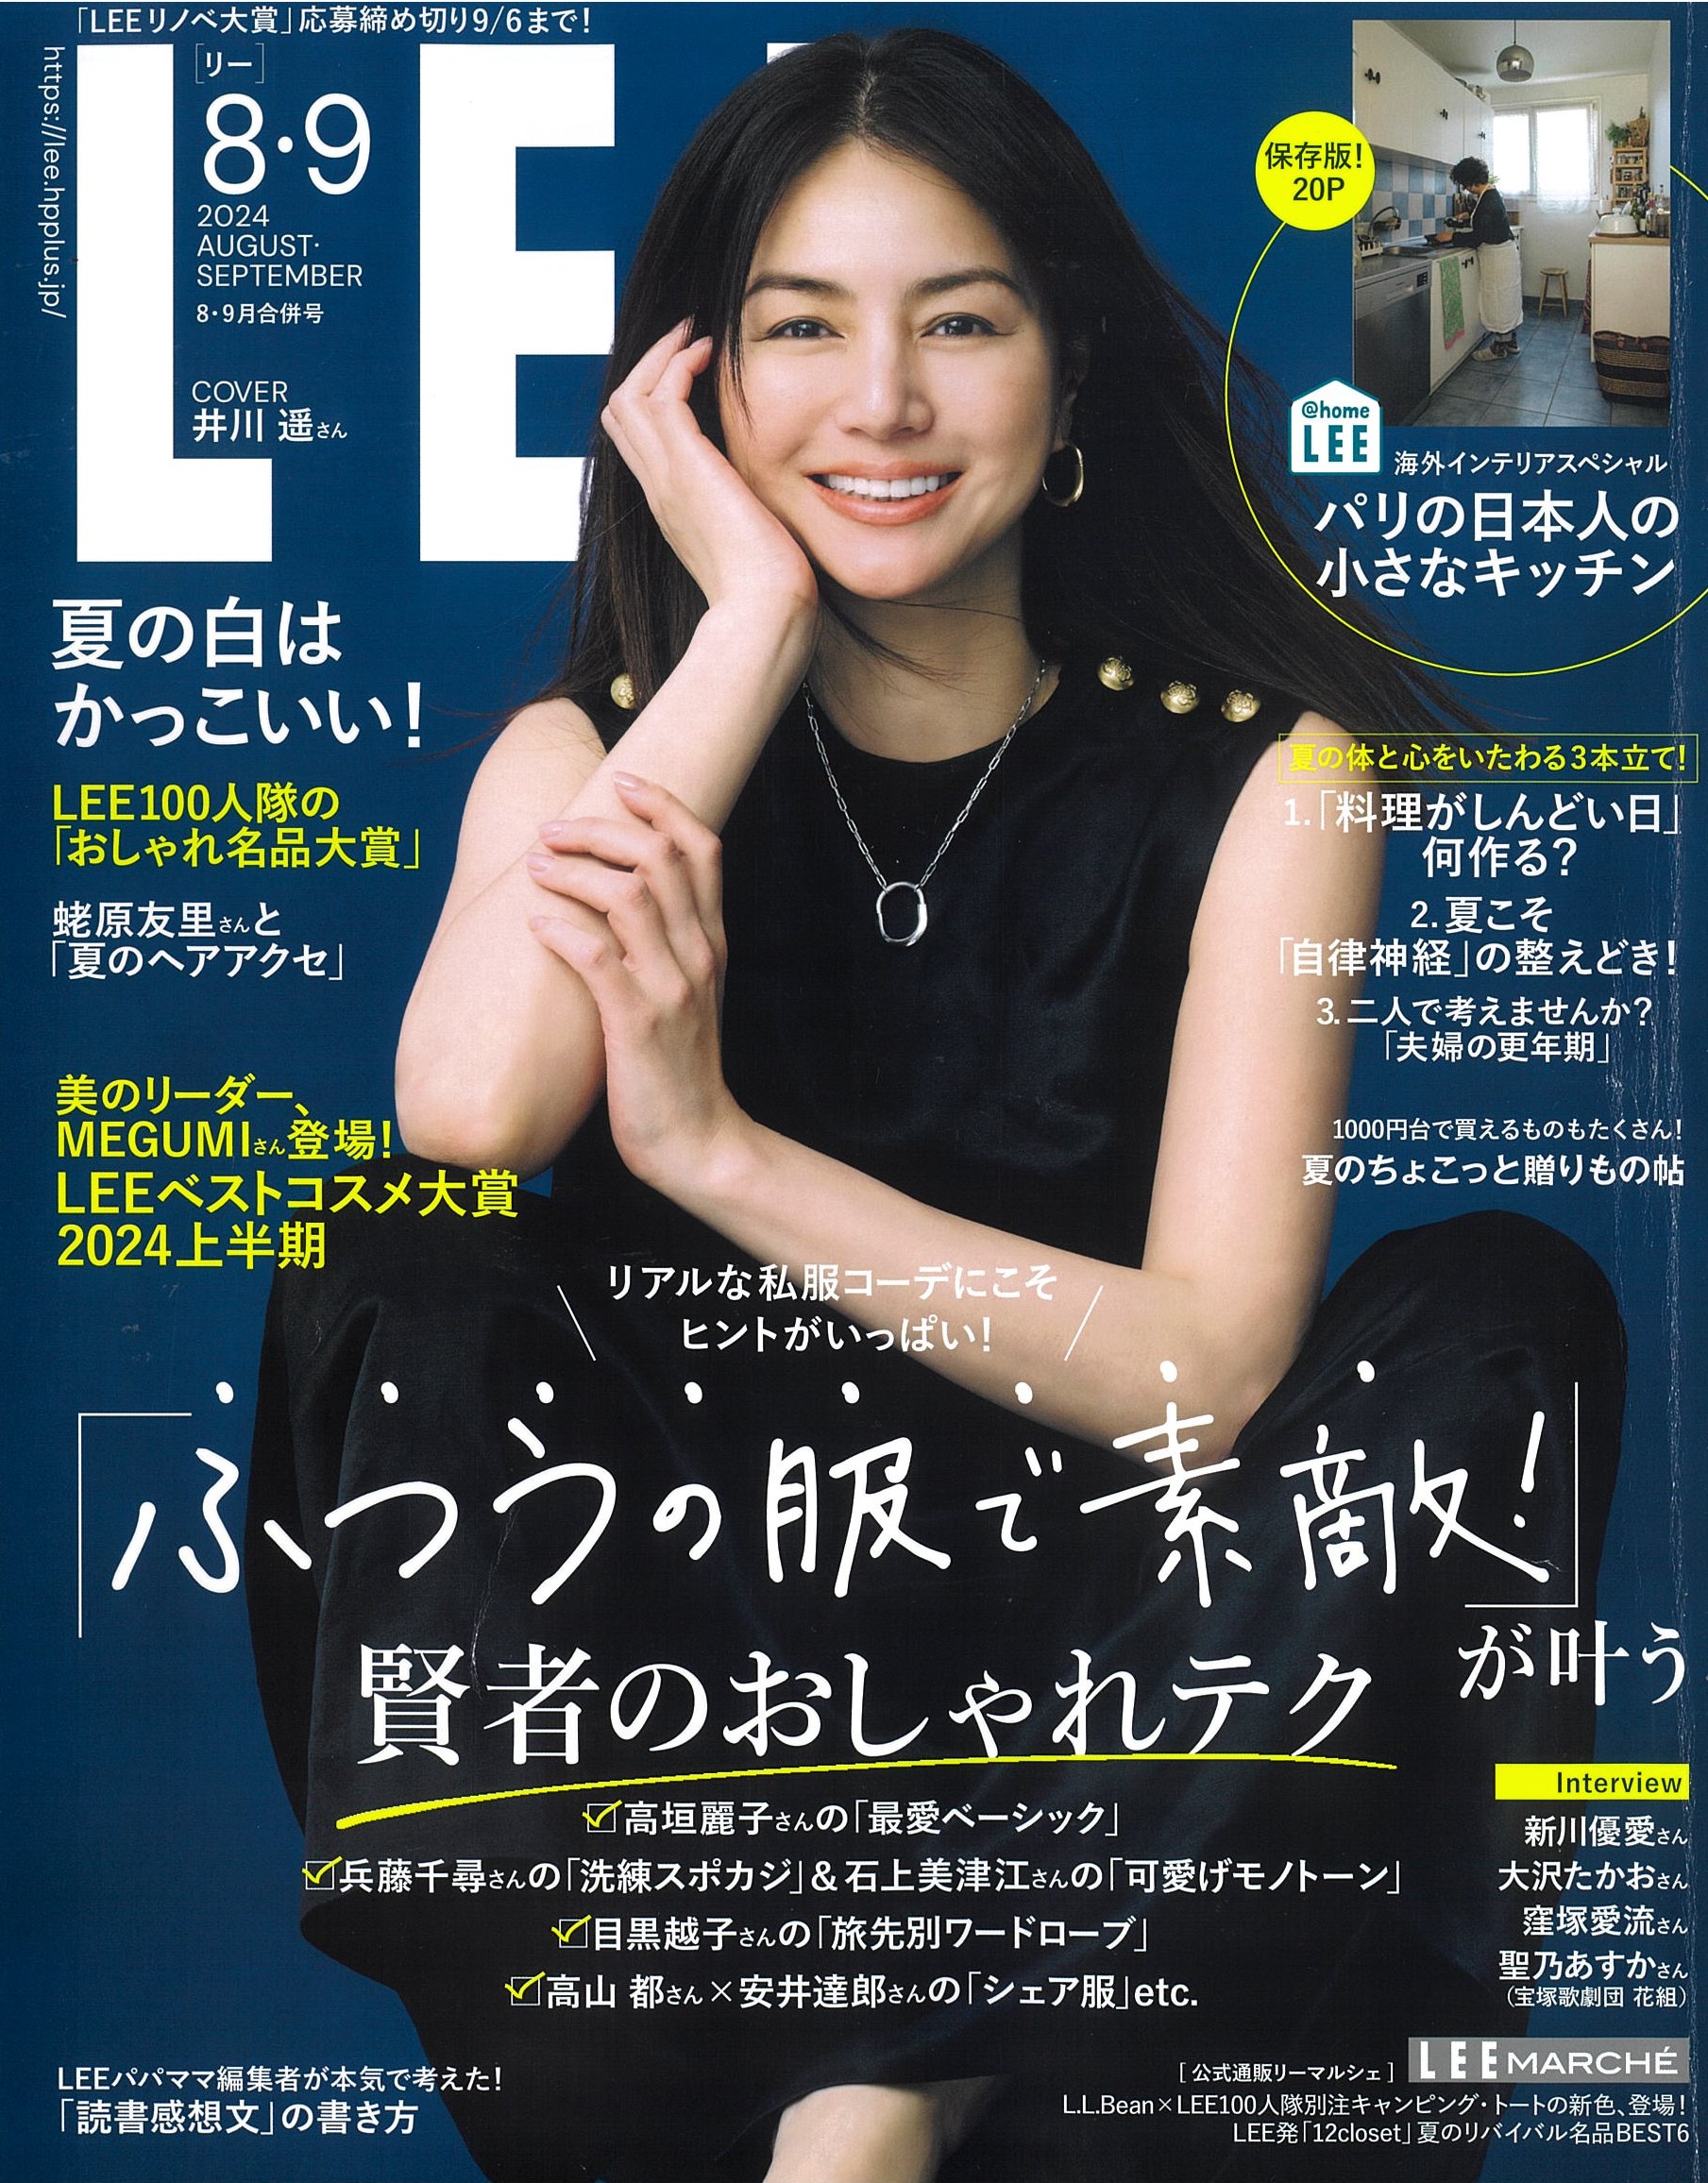 Launer London handbag is introduced in 『LEE』 magazine.